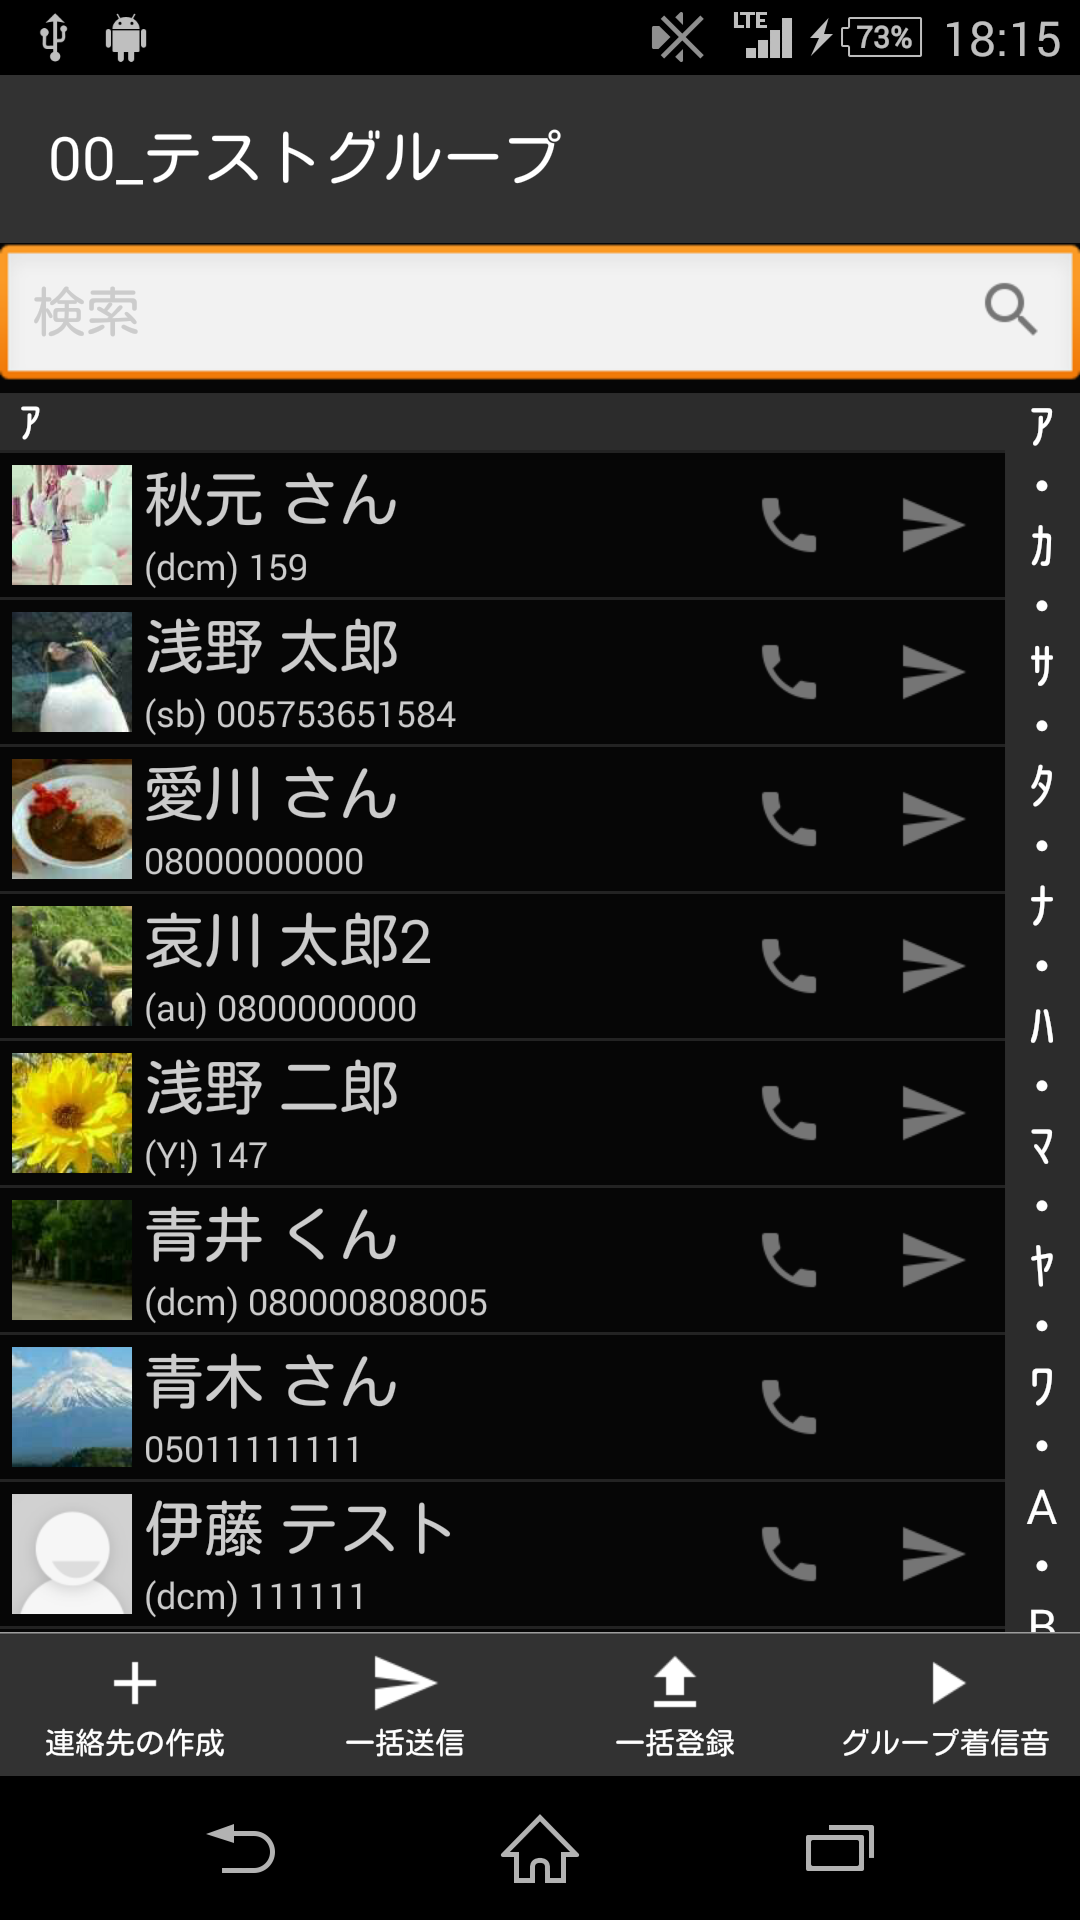 Android application gContactPro - dialer & contact screenshort